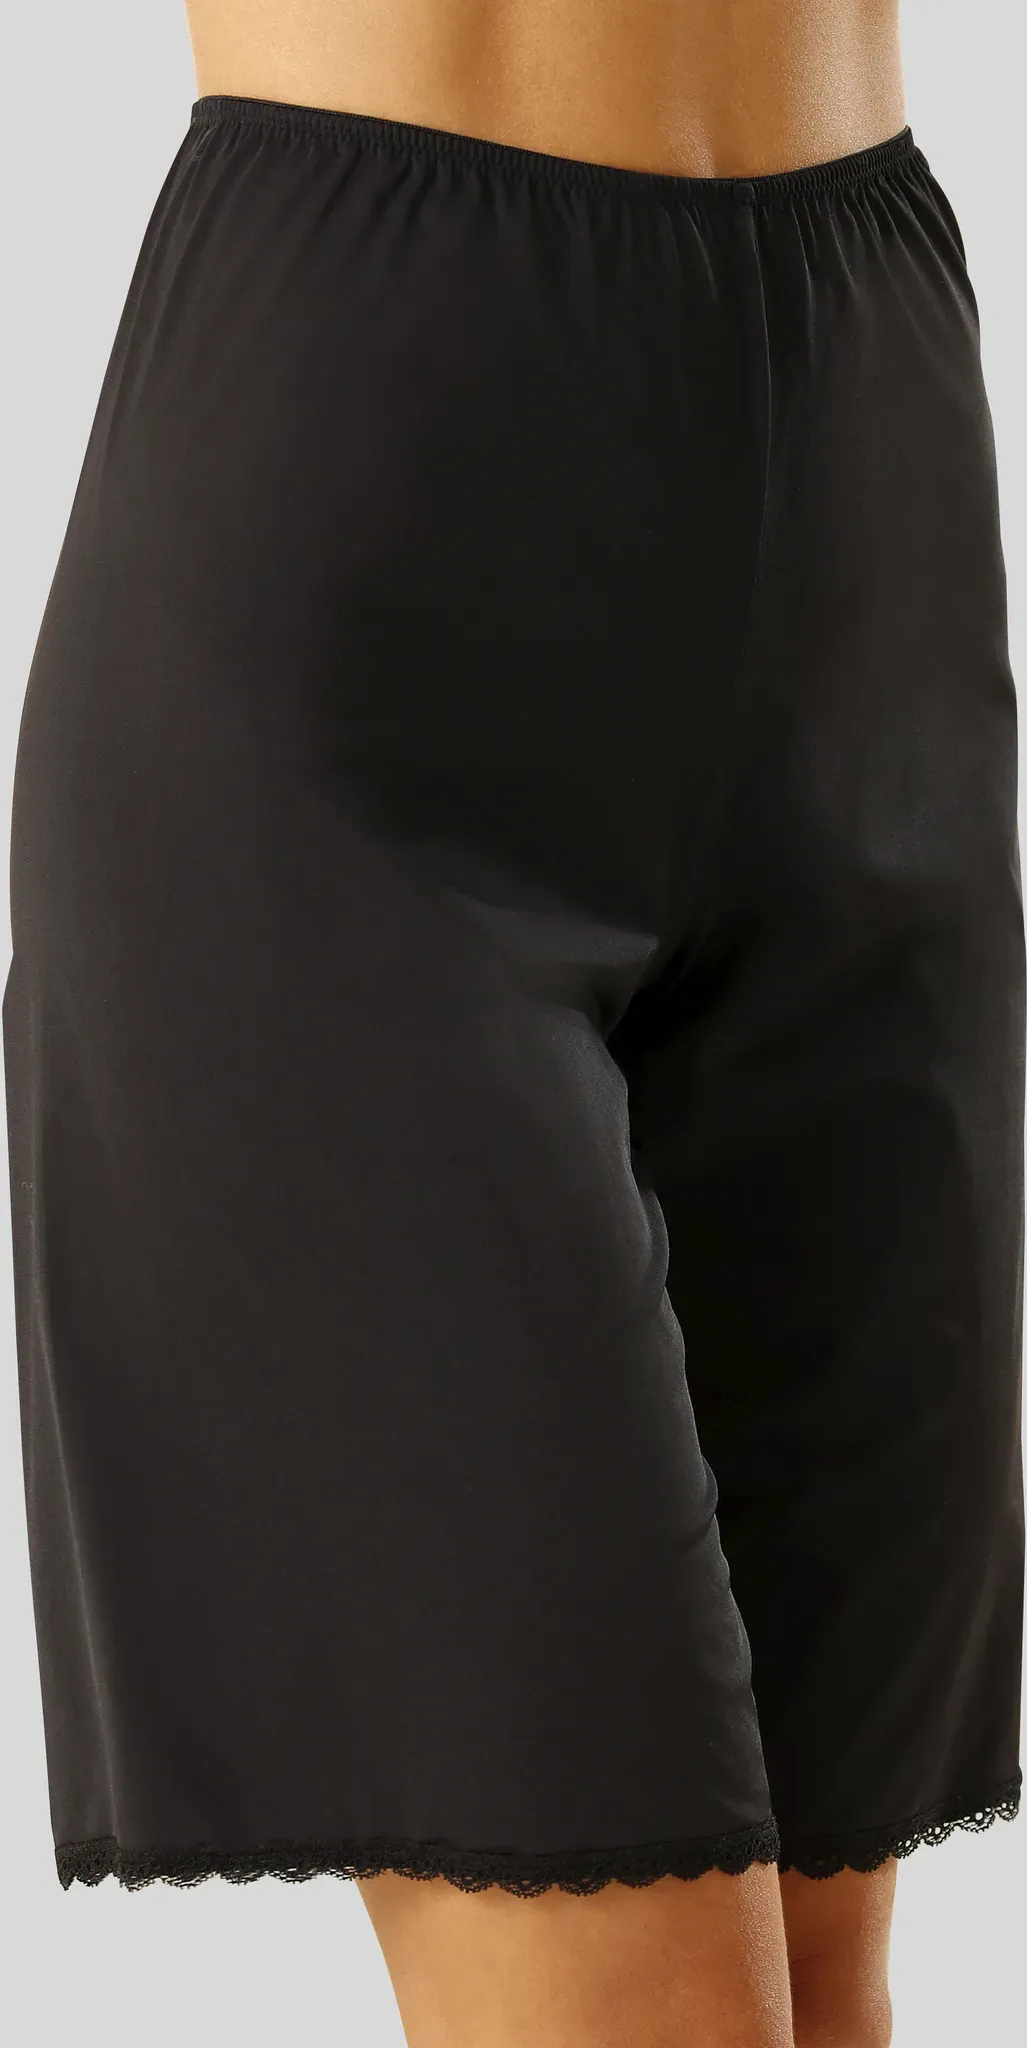 Hosenunterrock NUANCE Gr. 56/58, schwarz Damen Unterhosen Nuance aus weich, fließendem Material